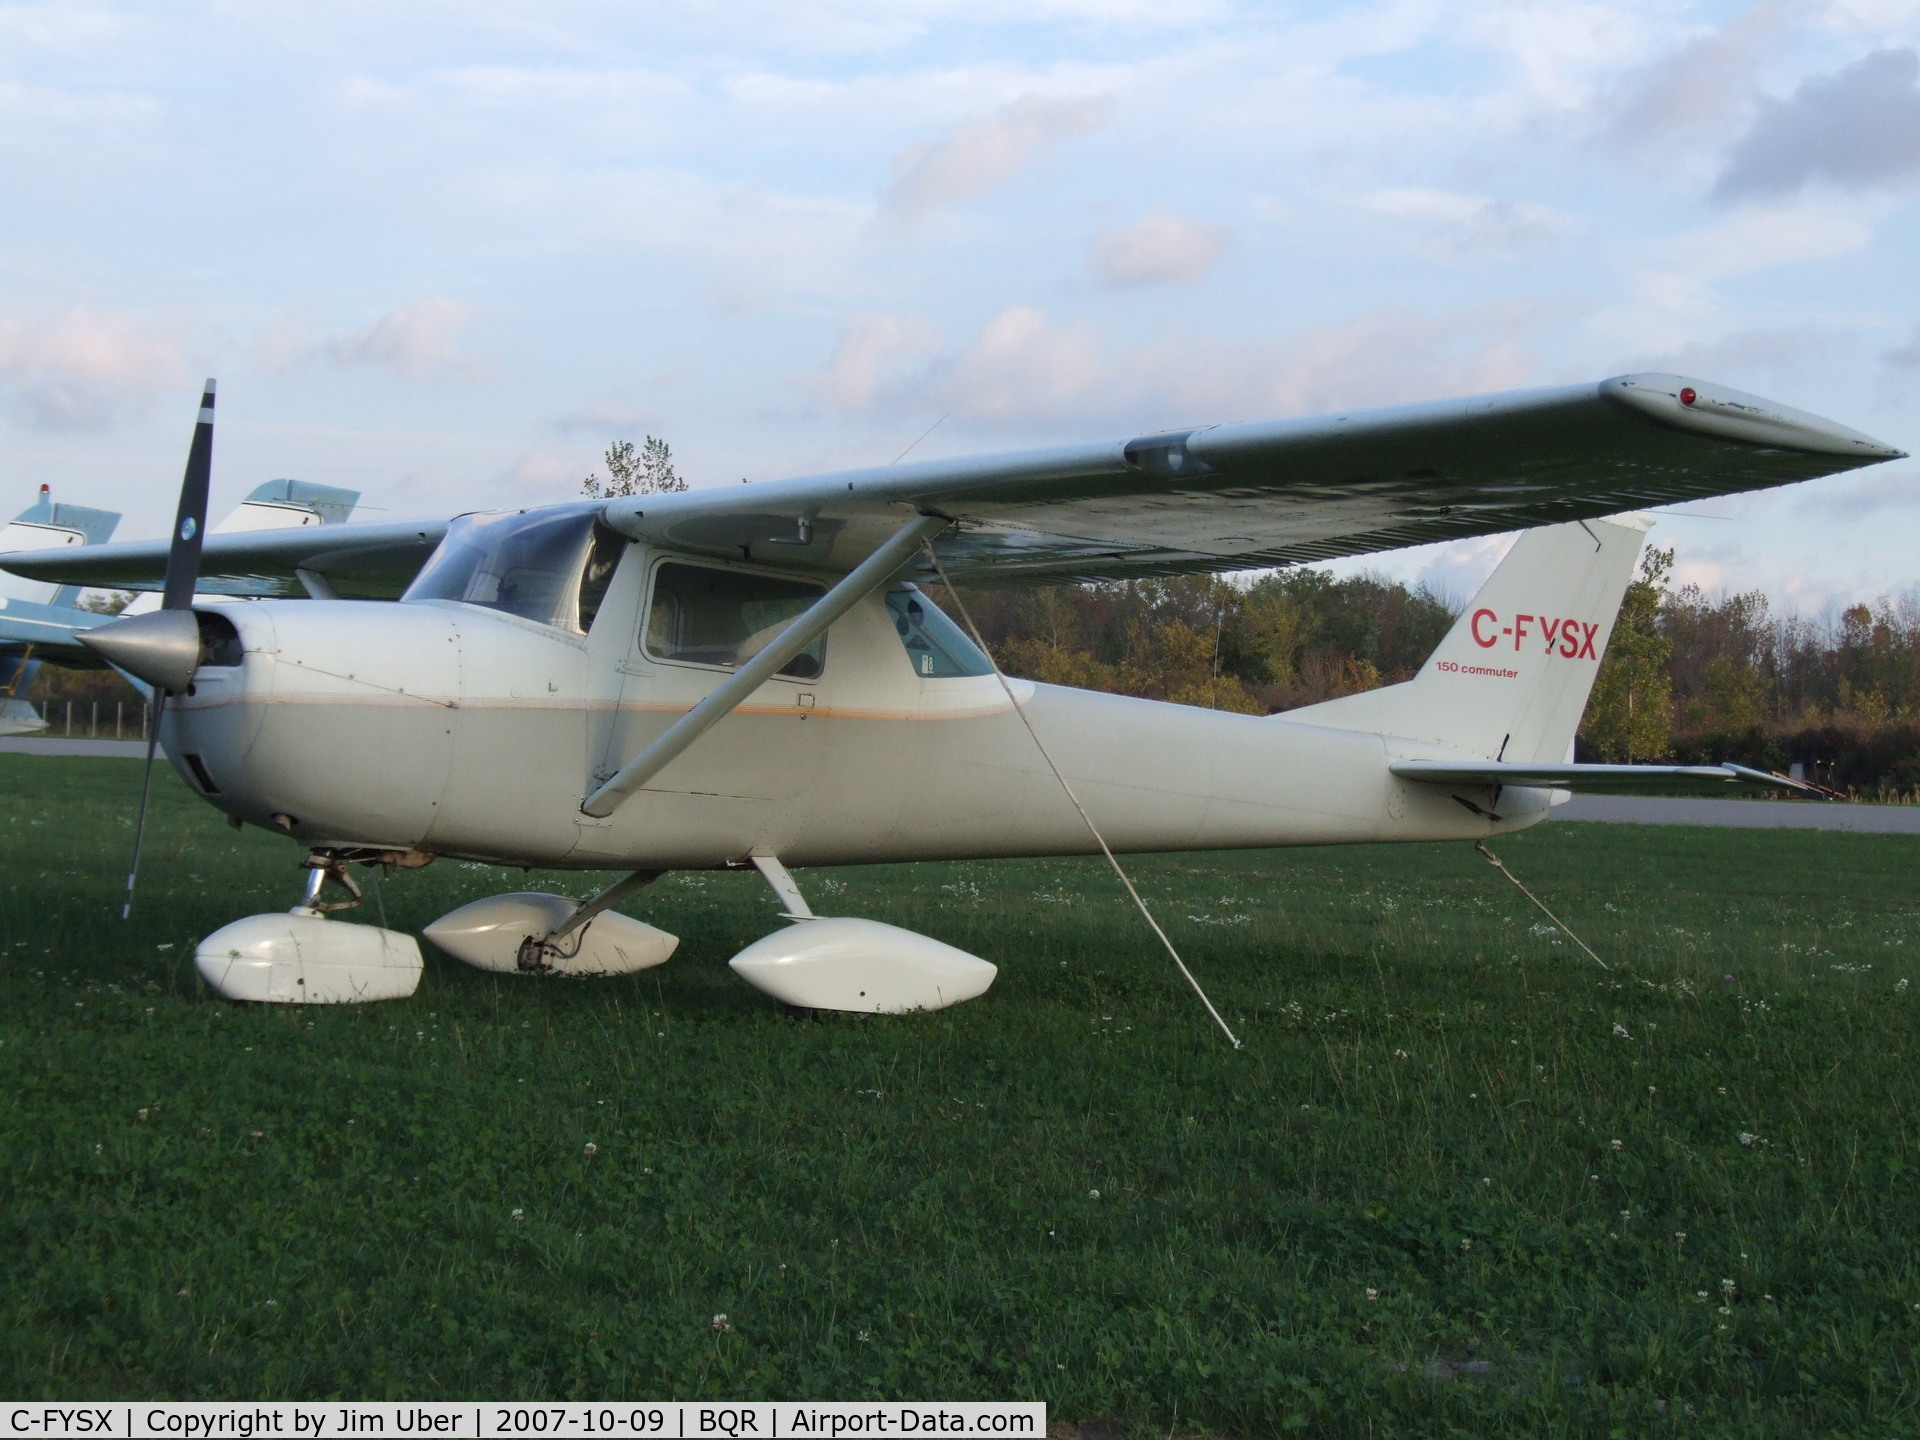 C-FYSX, 1967 Cessna 150G C/N 15066920, Waitin for the new hangars...